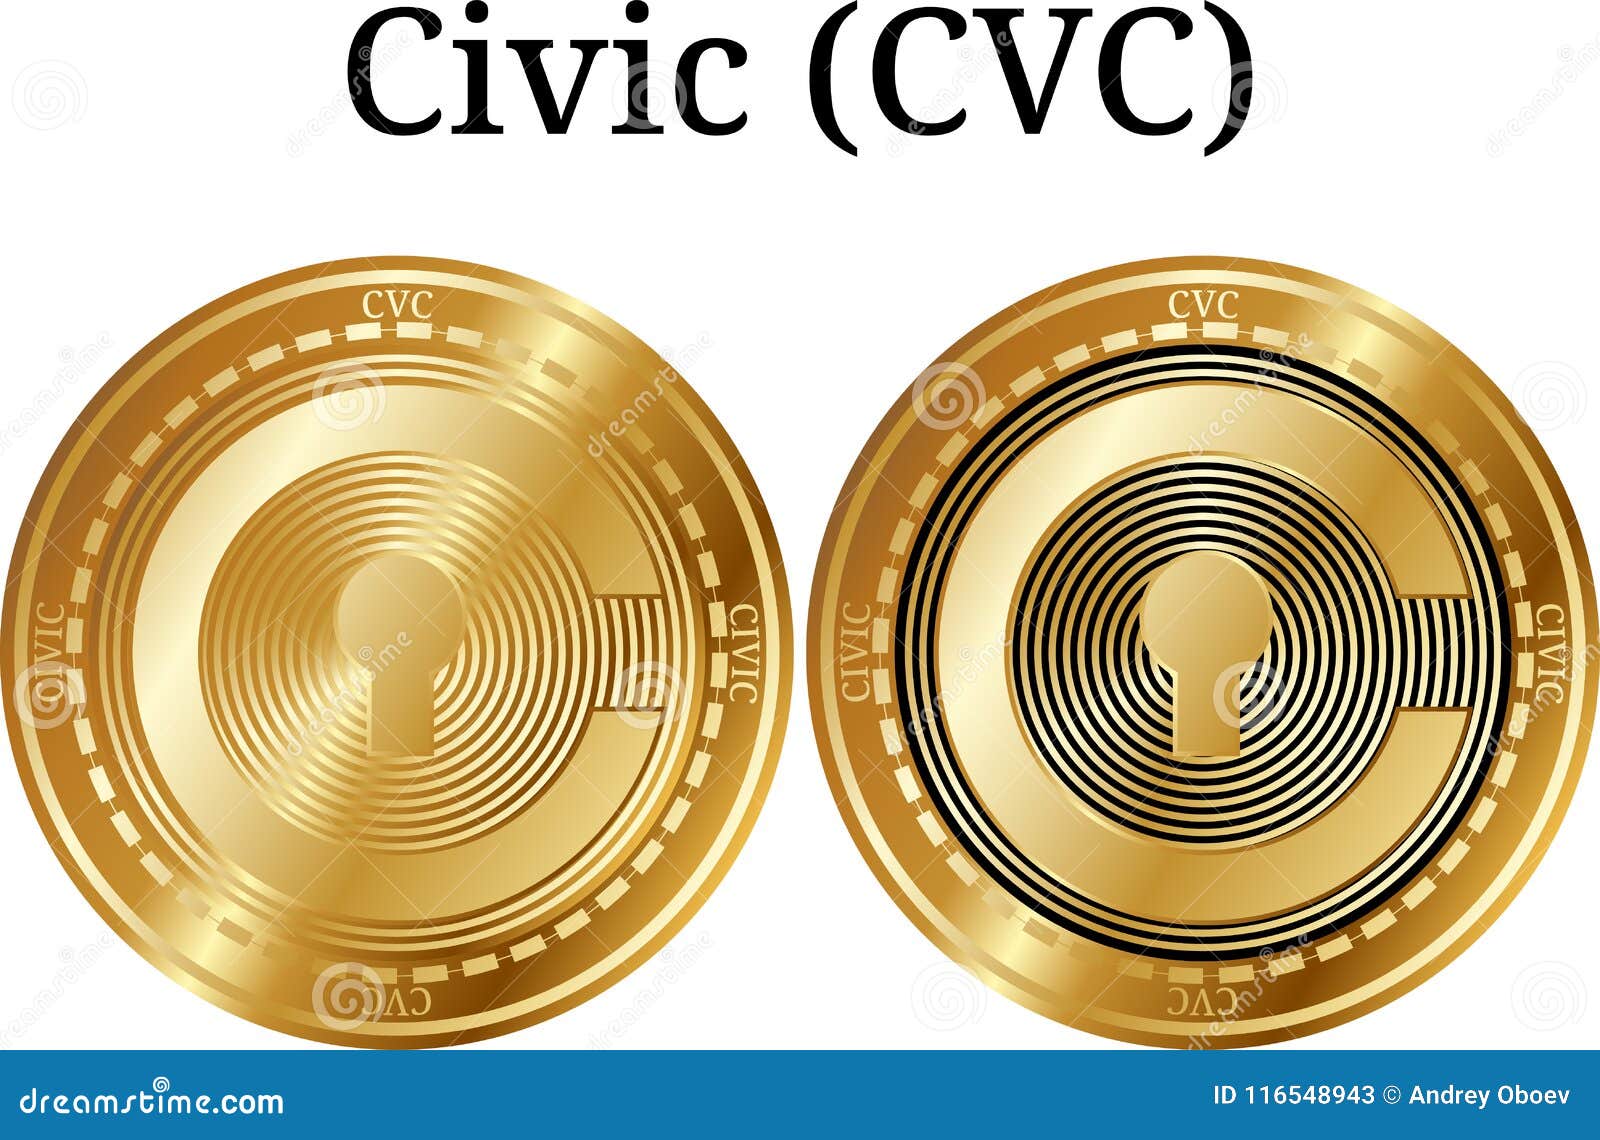 Civic (CVC) Review: Securing Digital Identity on The Blockchain - Coin Bureau